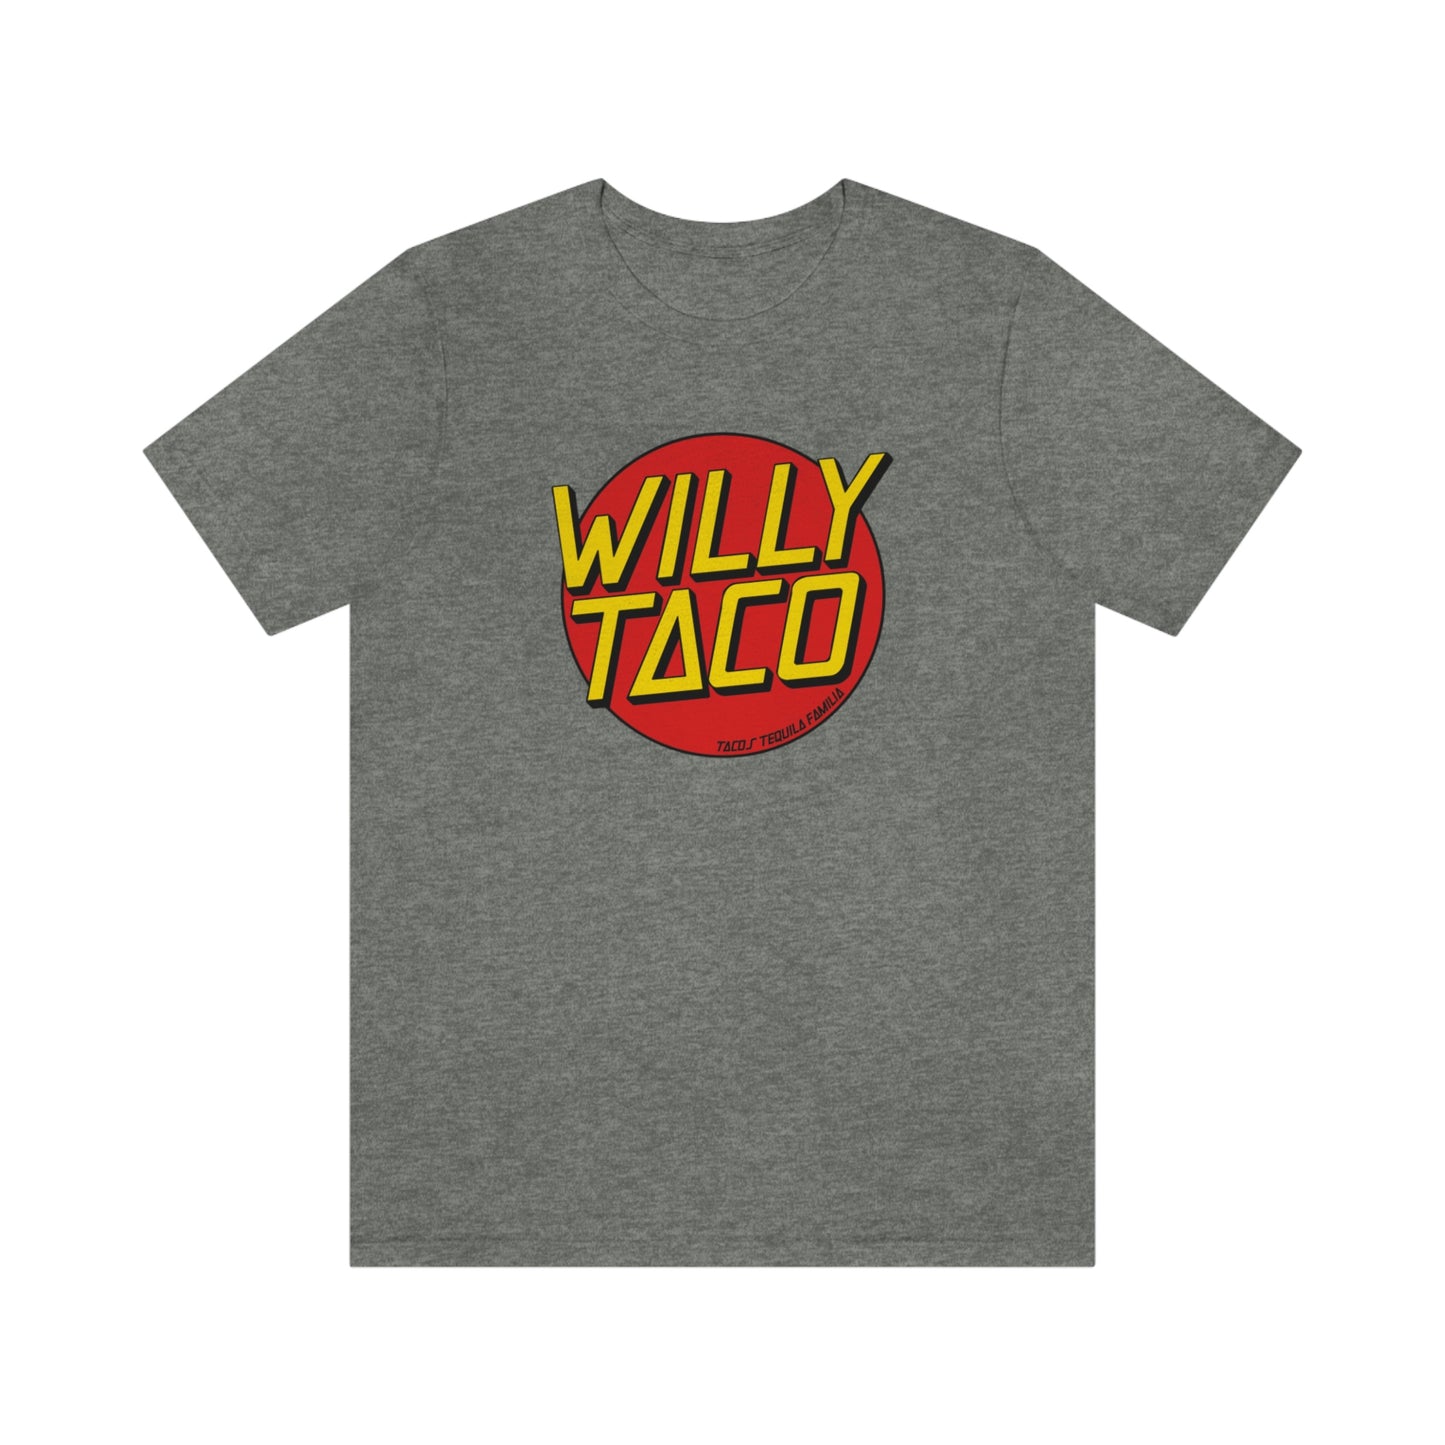 Willy Taco Surf Snow Skate Short Sleeve Tee